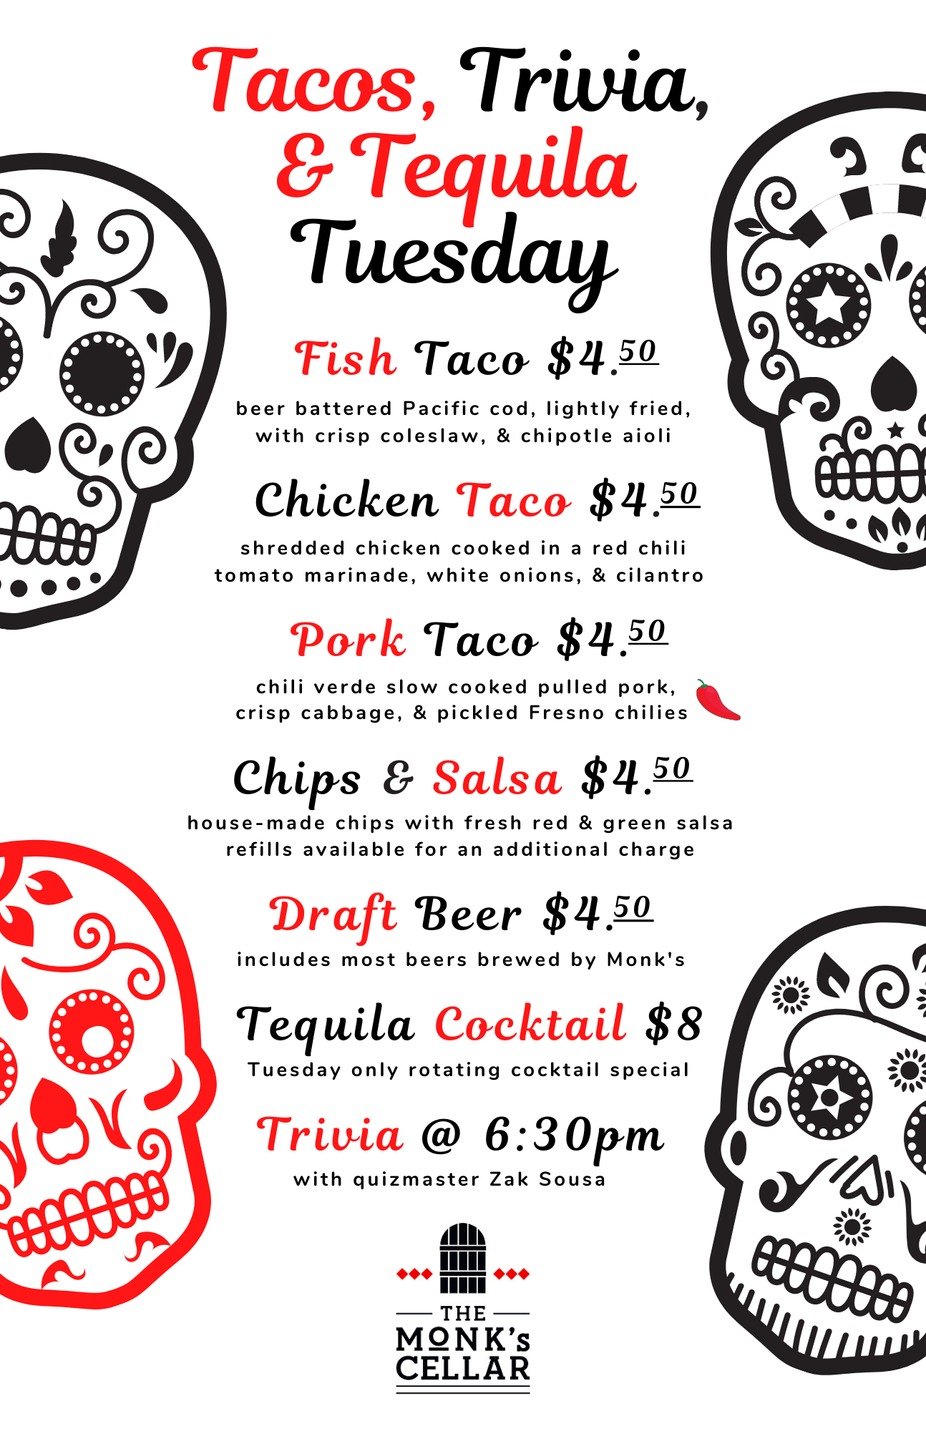 Tacos, Trivia, & Tequila Tuesday event photo